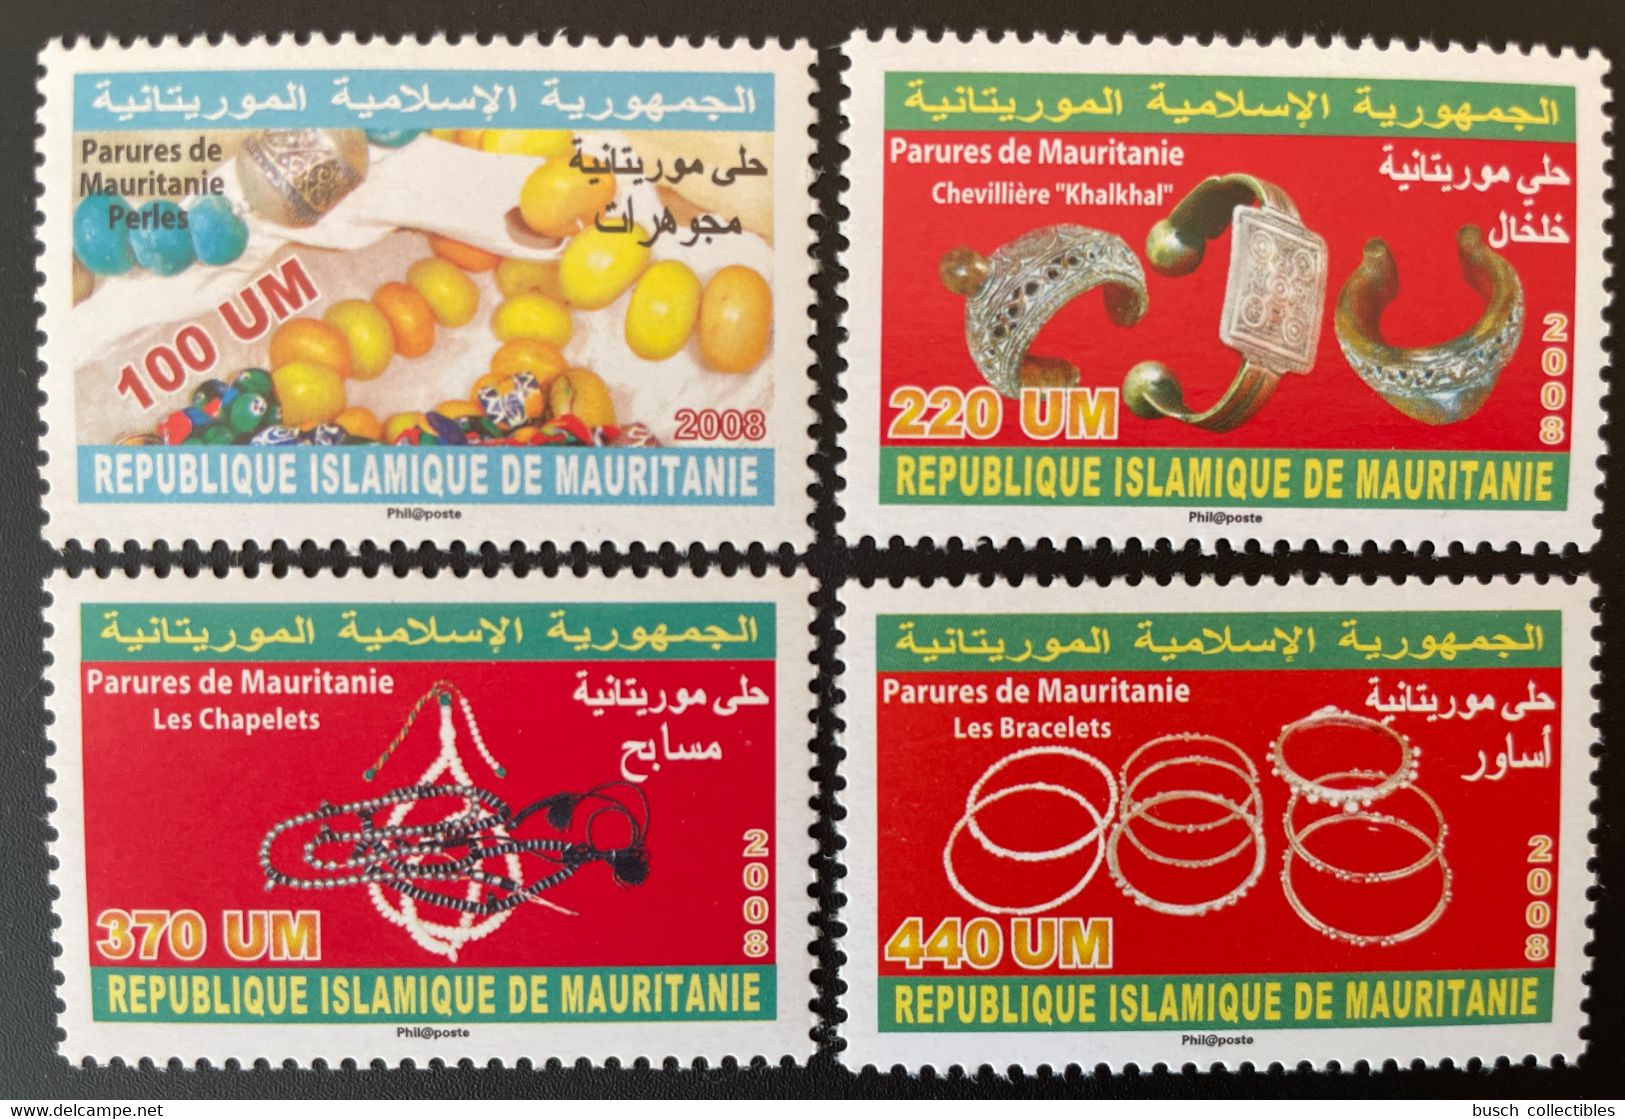 Mauritanie Mauretanien Mauritania 2008 Mi. 1157 - 1160 Parures Perles Bracelets Chapelets Bijoux Schmuck Jewels MNH ** - Mauritanie (1960-...)